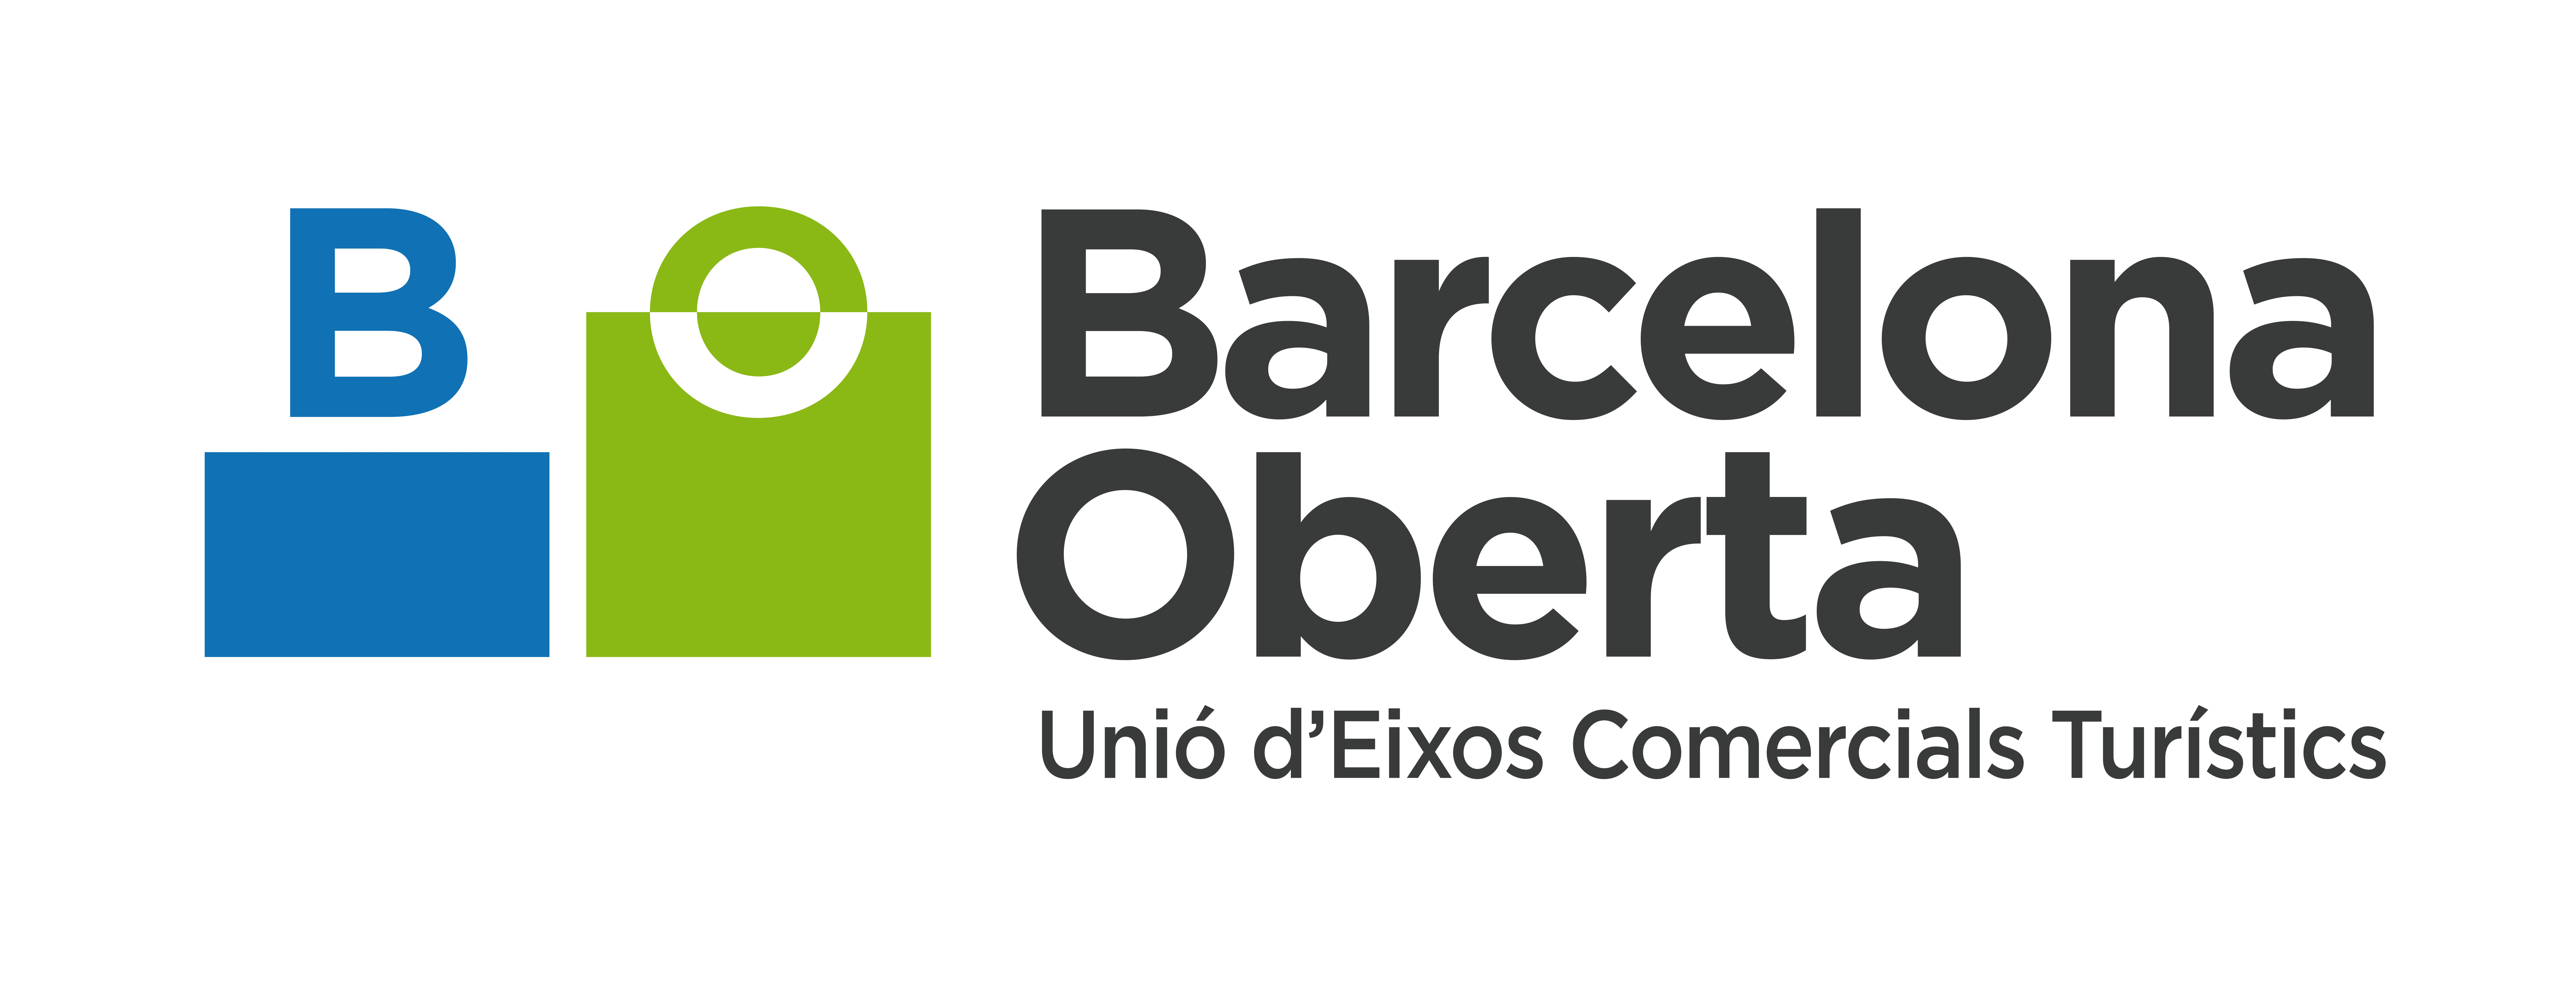 Barcelona Oberta